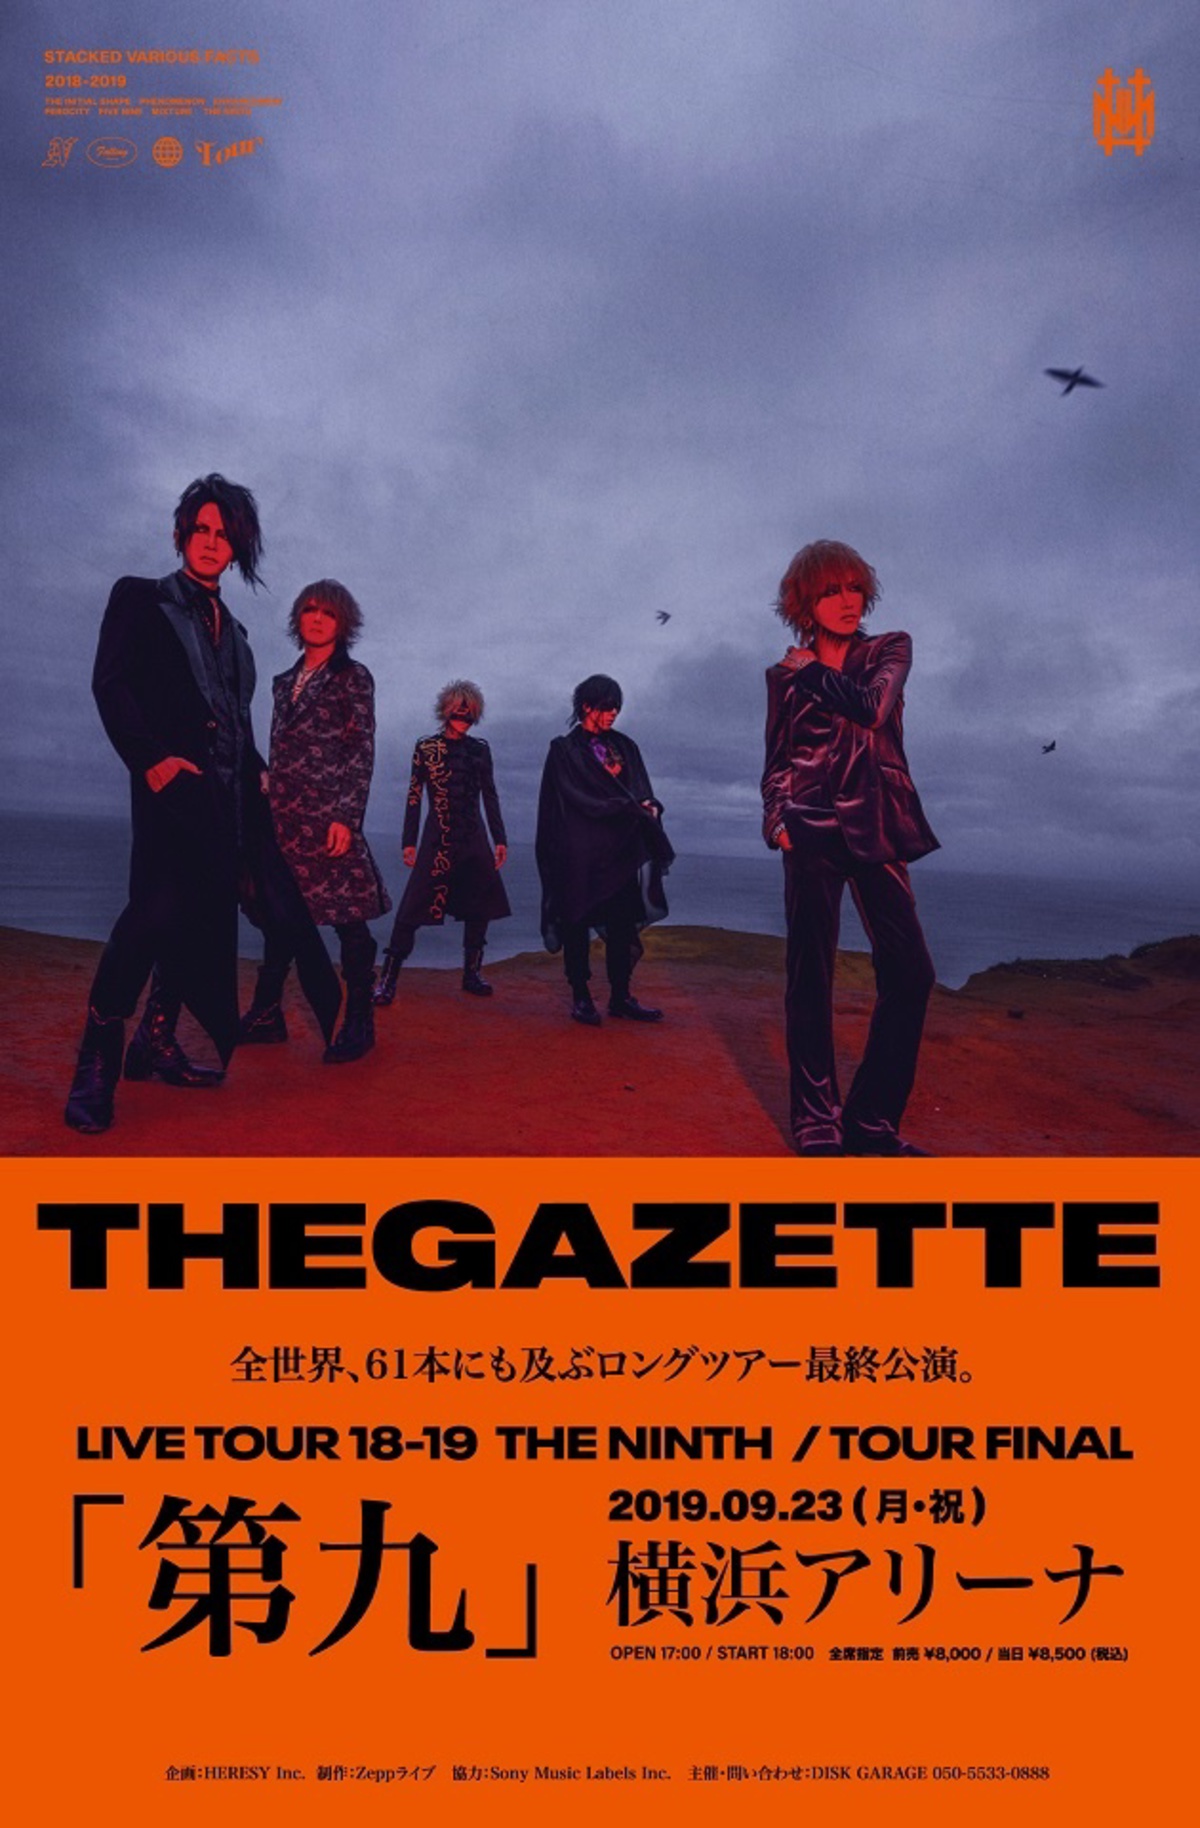 LIVE TOUR18-19 THE NINTH